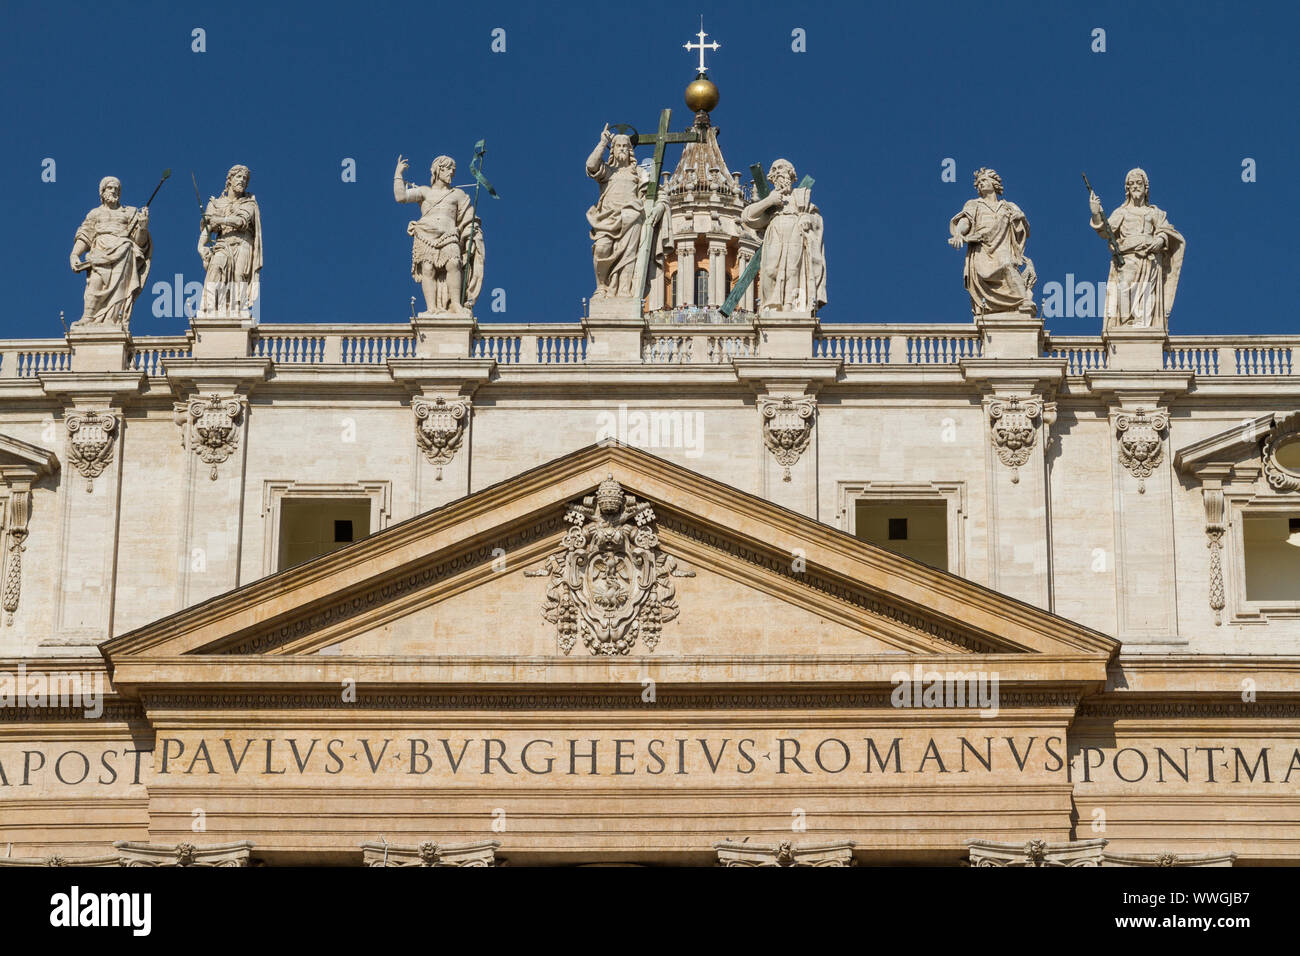 Ita: Vaticano. La Basilica di San Pietro. statue apostoli GER: Vatikan. Petersdom. Statuen Apostel Foto Stock